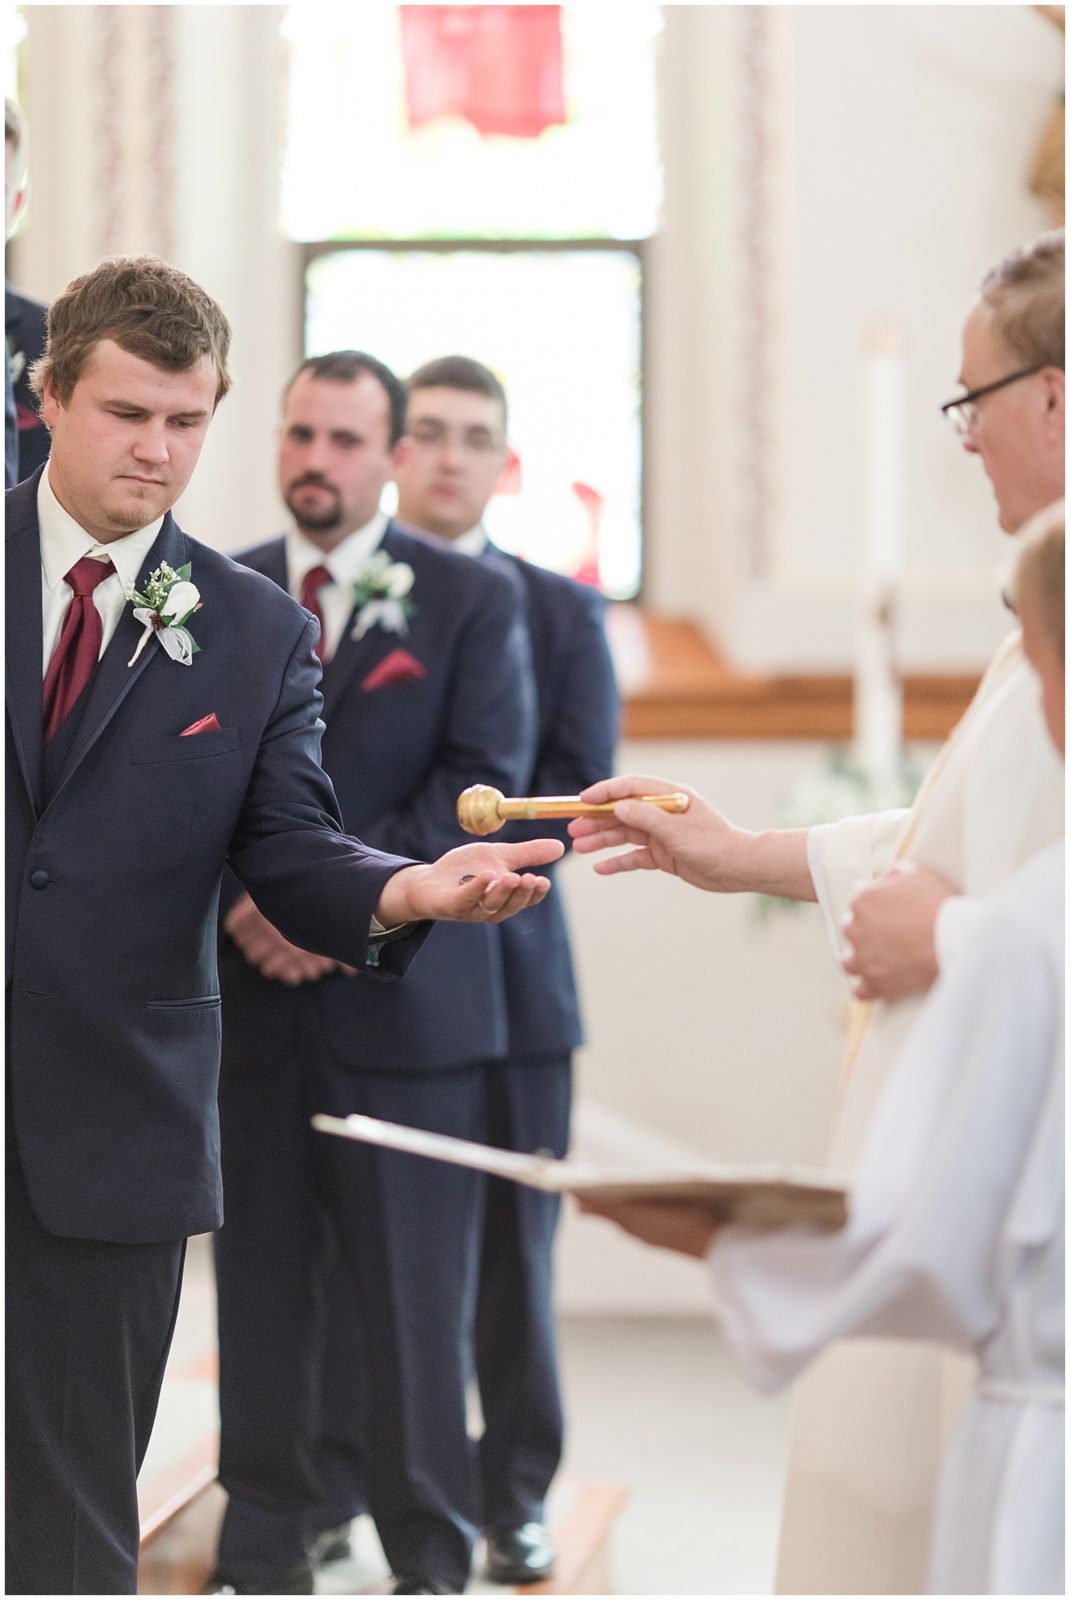 Ceremony | Wedding in Remsen, Iowa shot by Jessica Brees Photography | Remsen Wedding Photographer